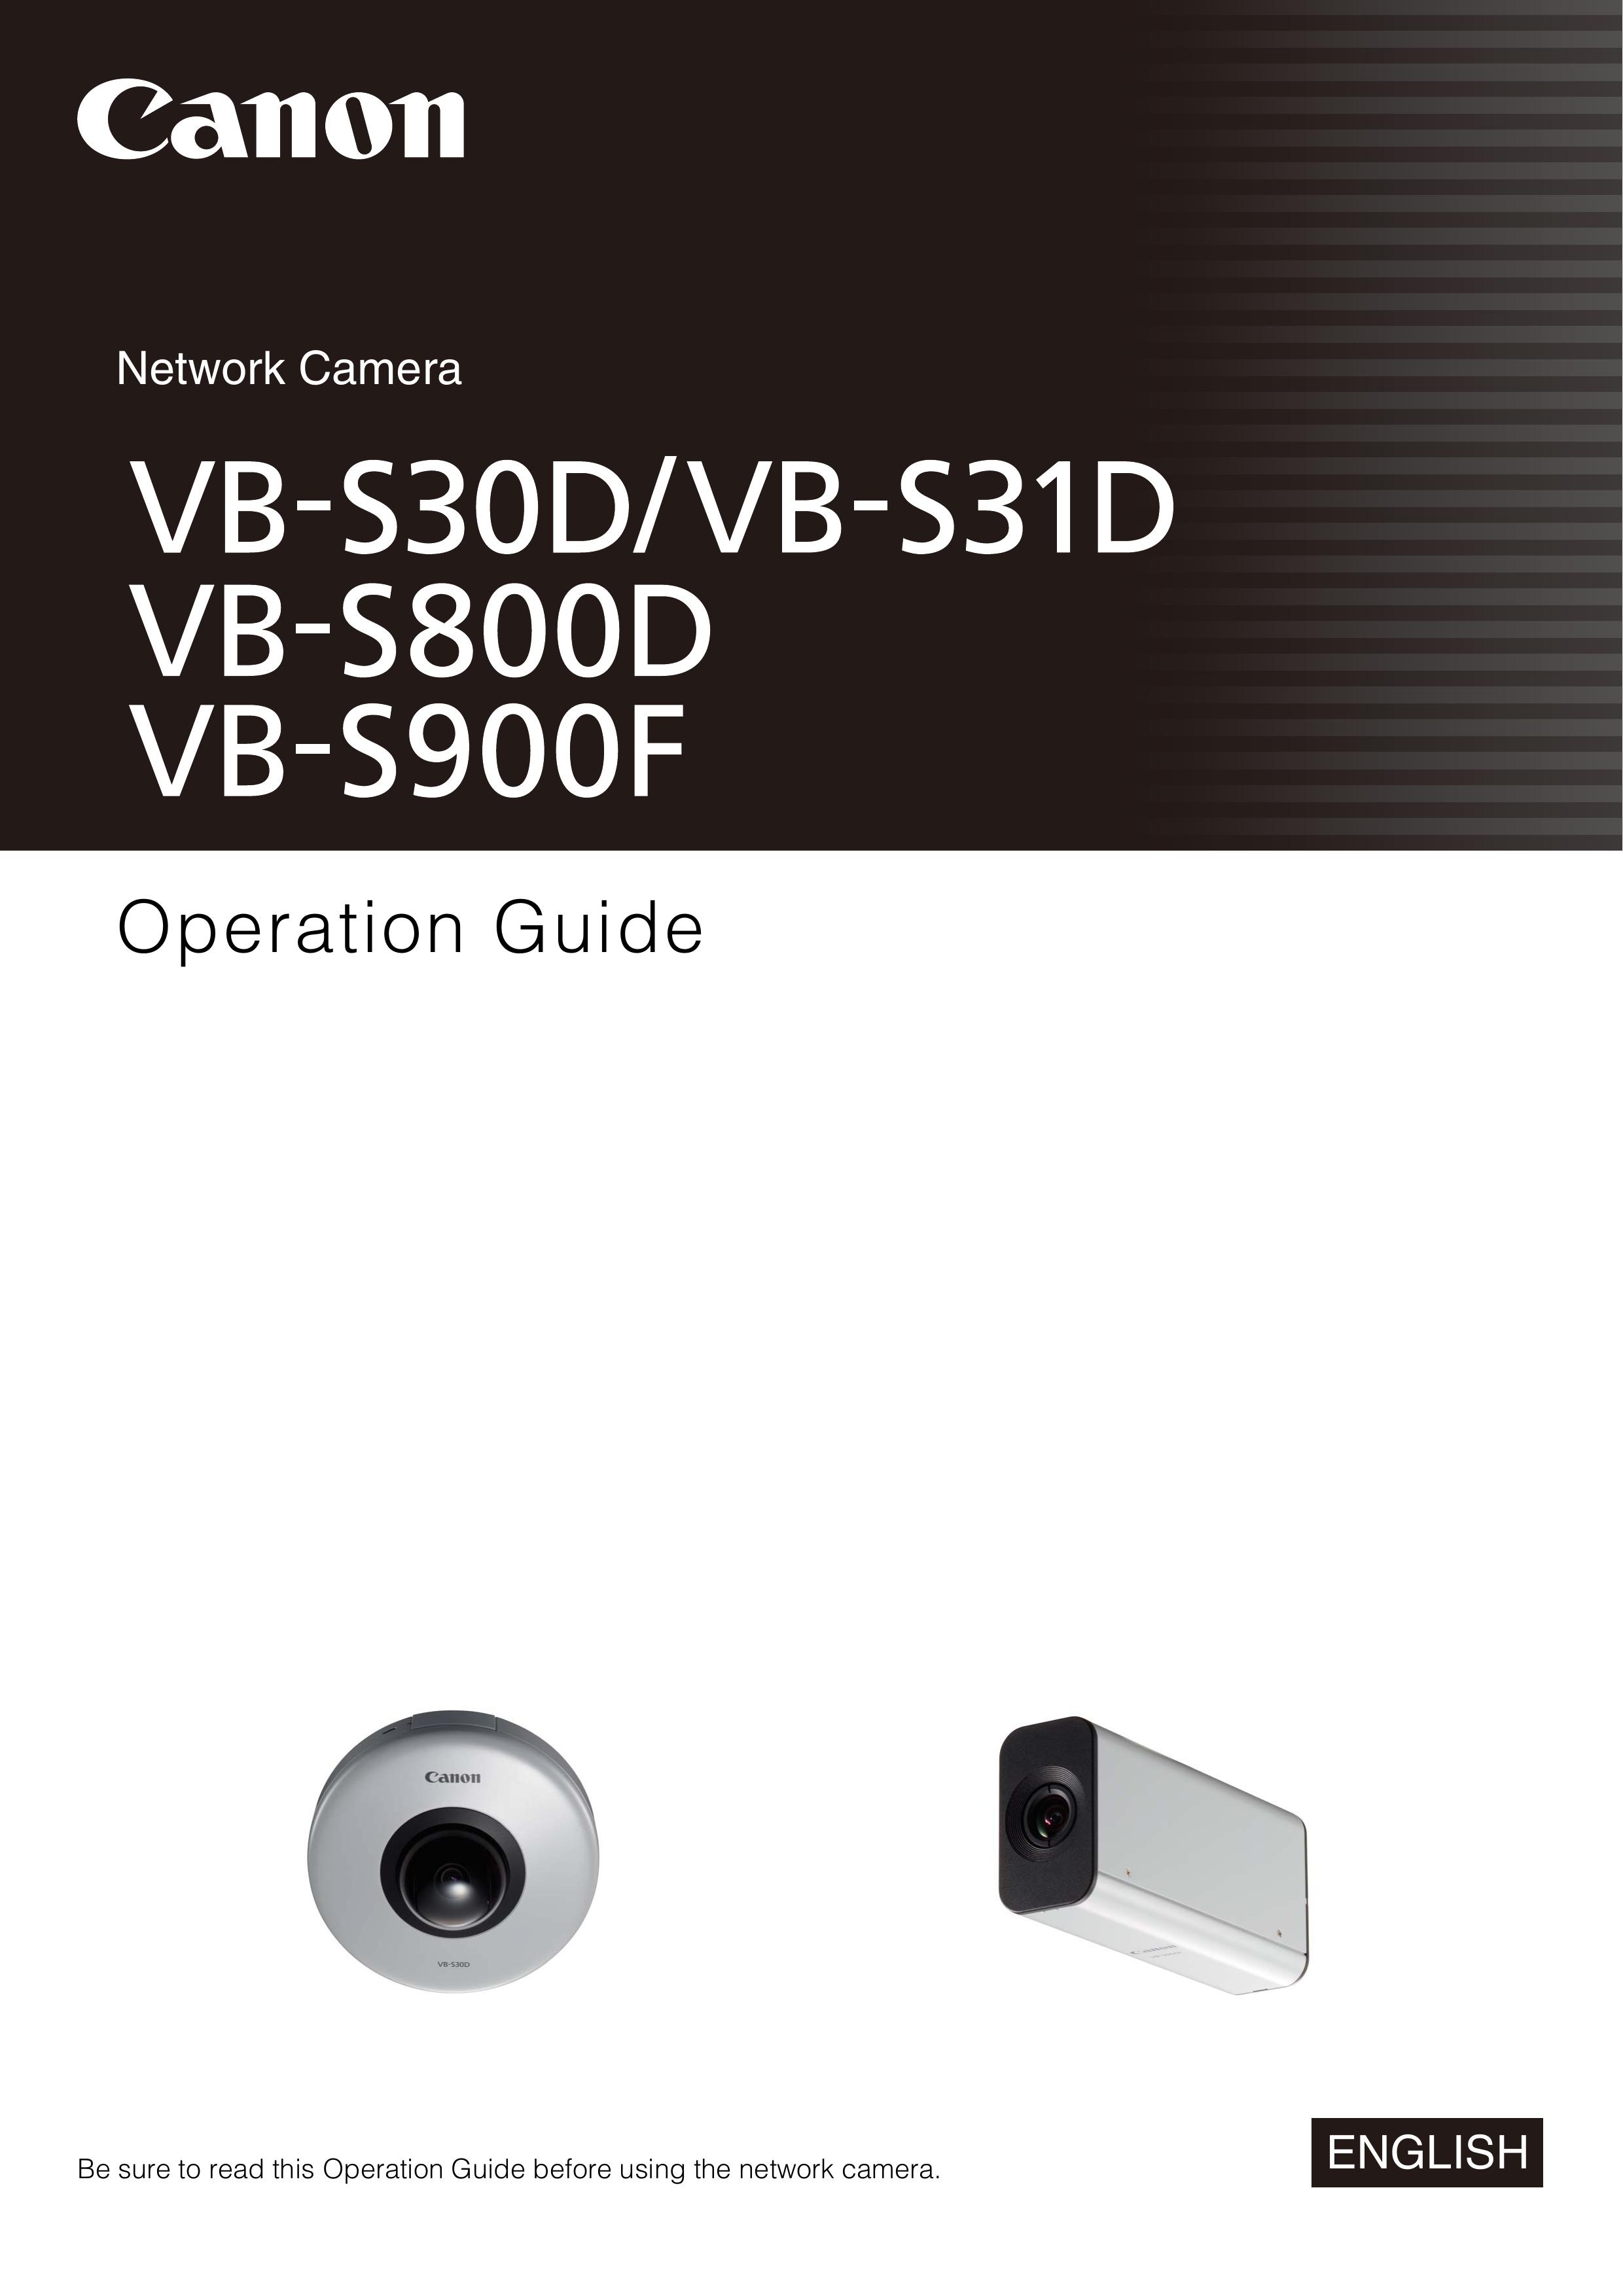 Canon vb-s800d Security Camera User Manual